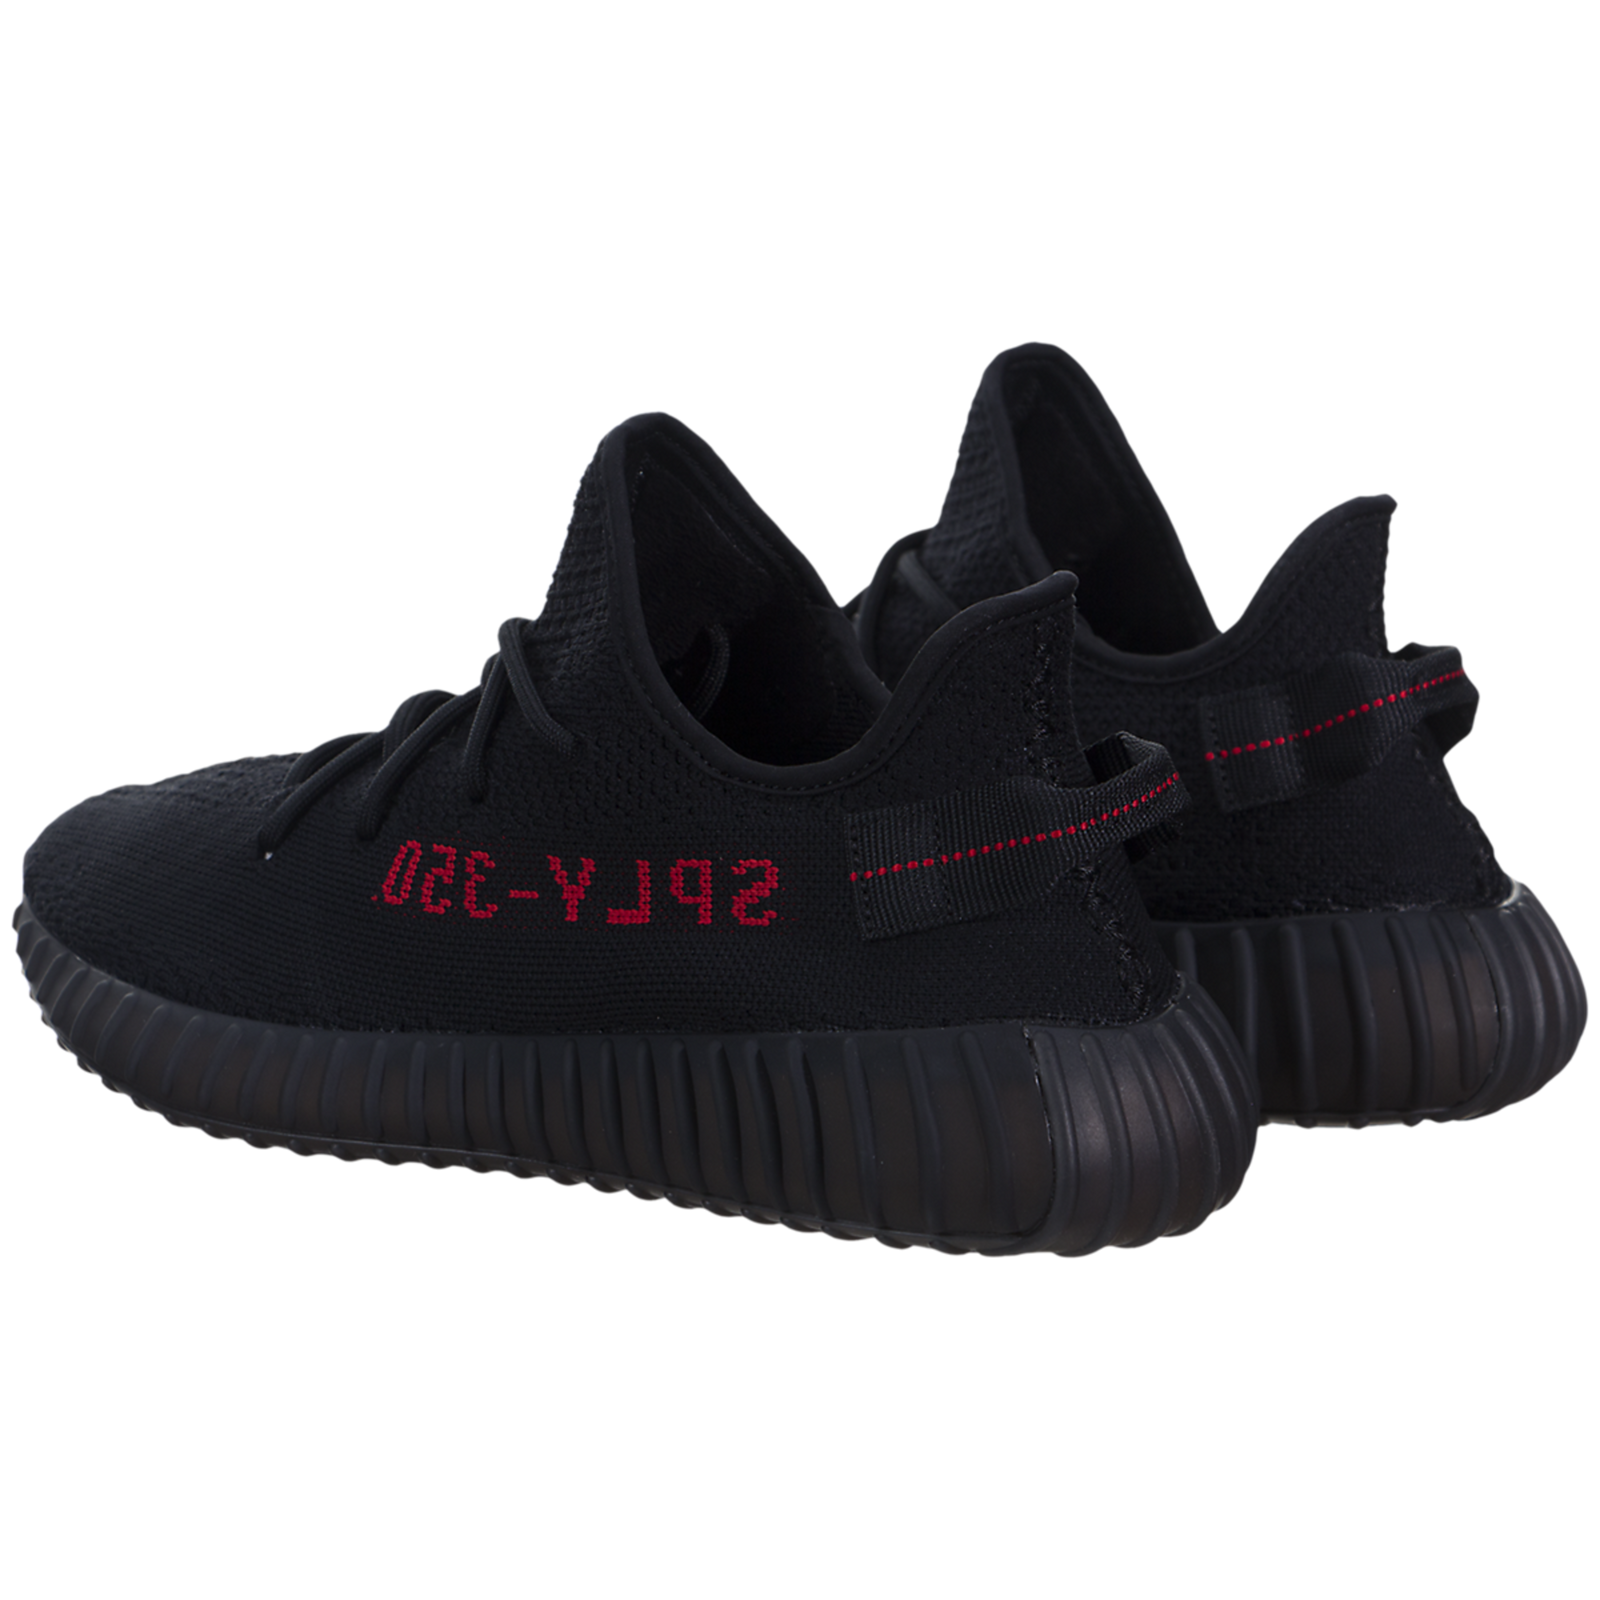 Adidas Yeezy Boost 350 V2 – SNEAKERHEAD.com